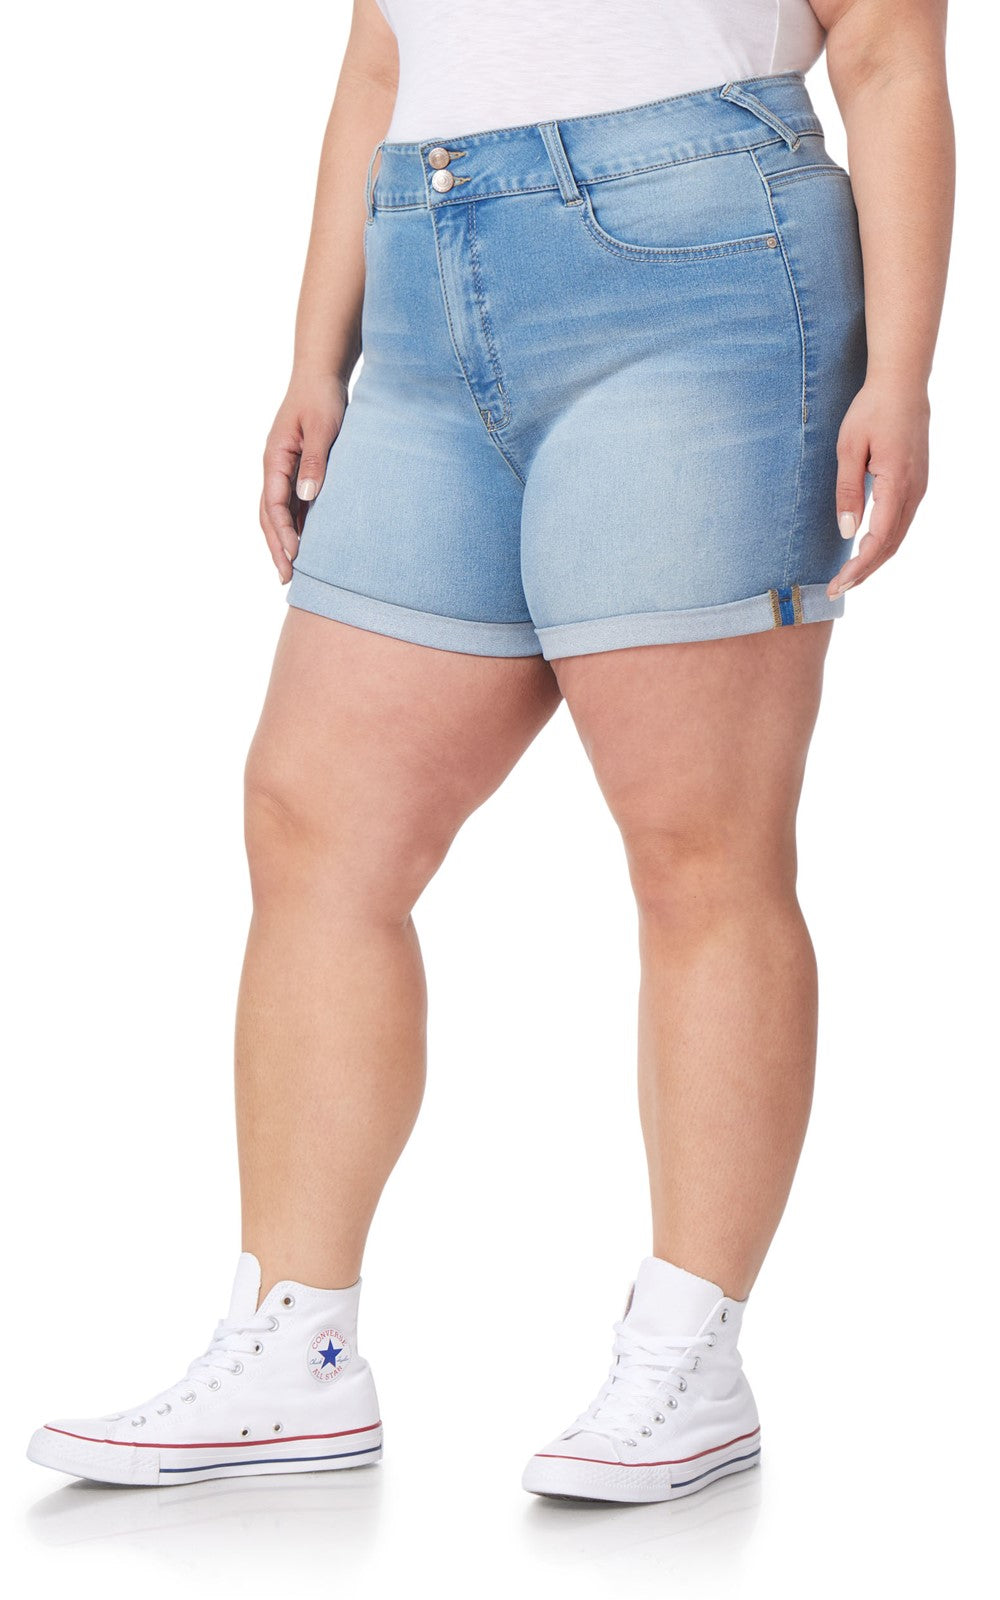 InstaSoft® Ultra Fit Shorts